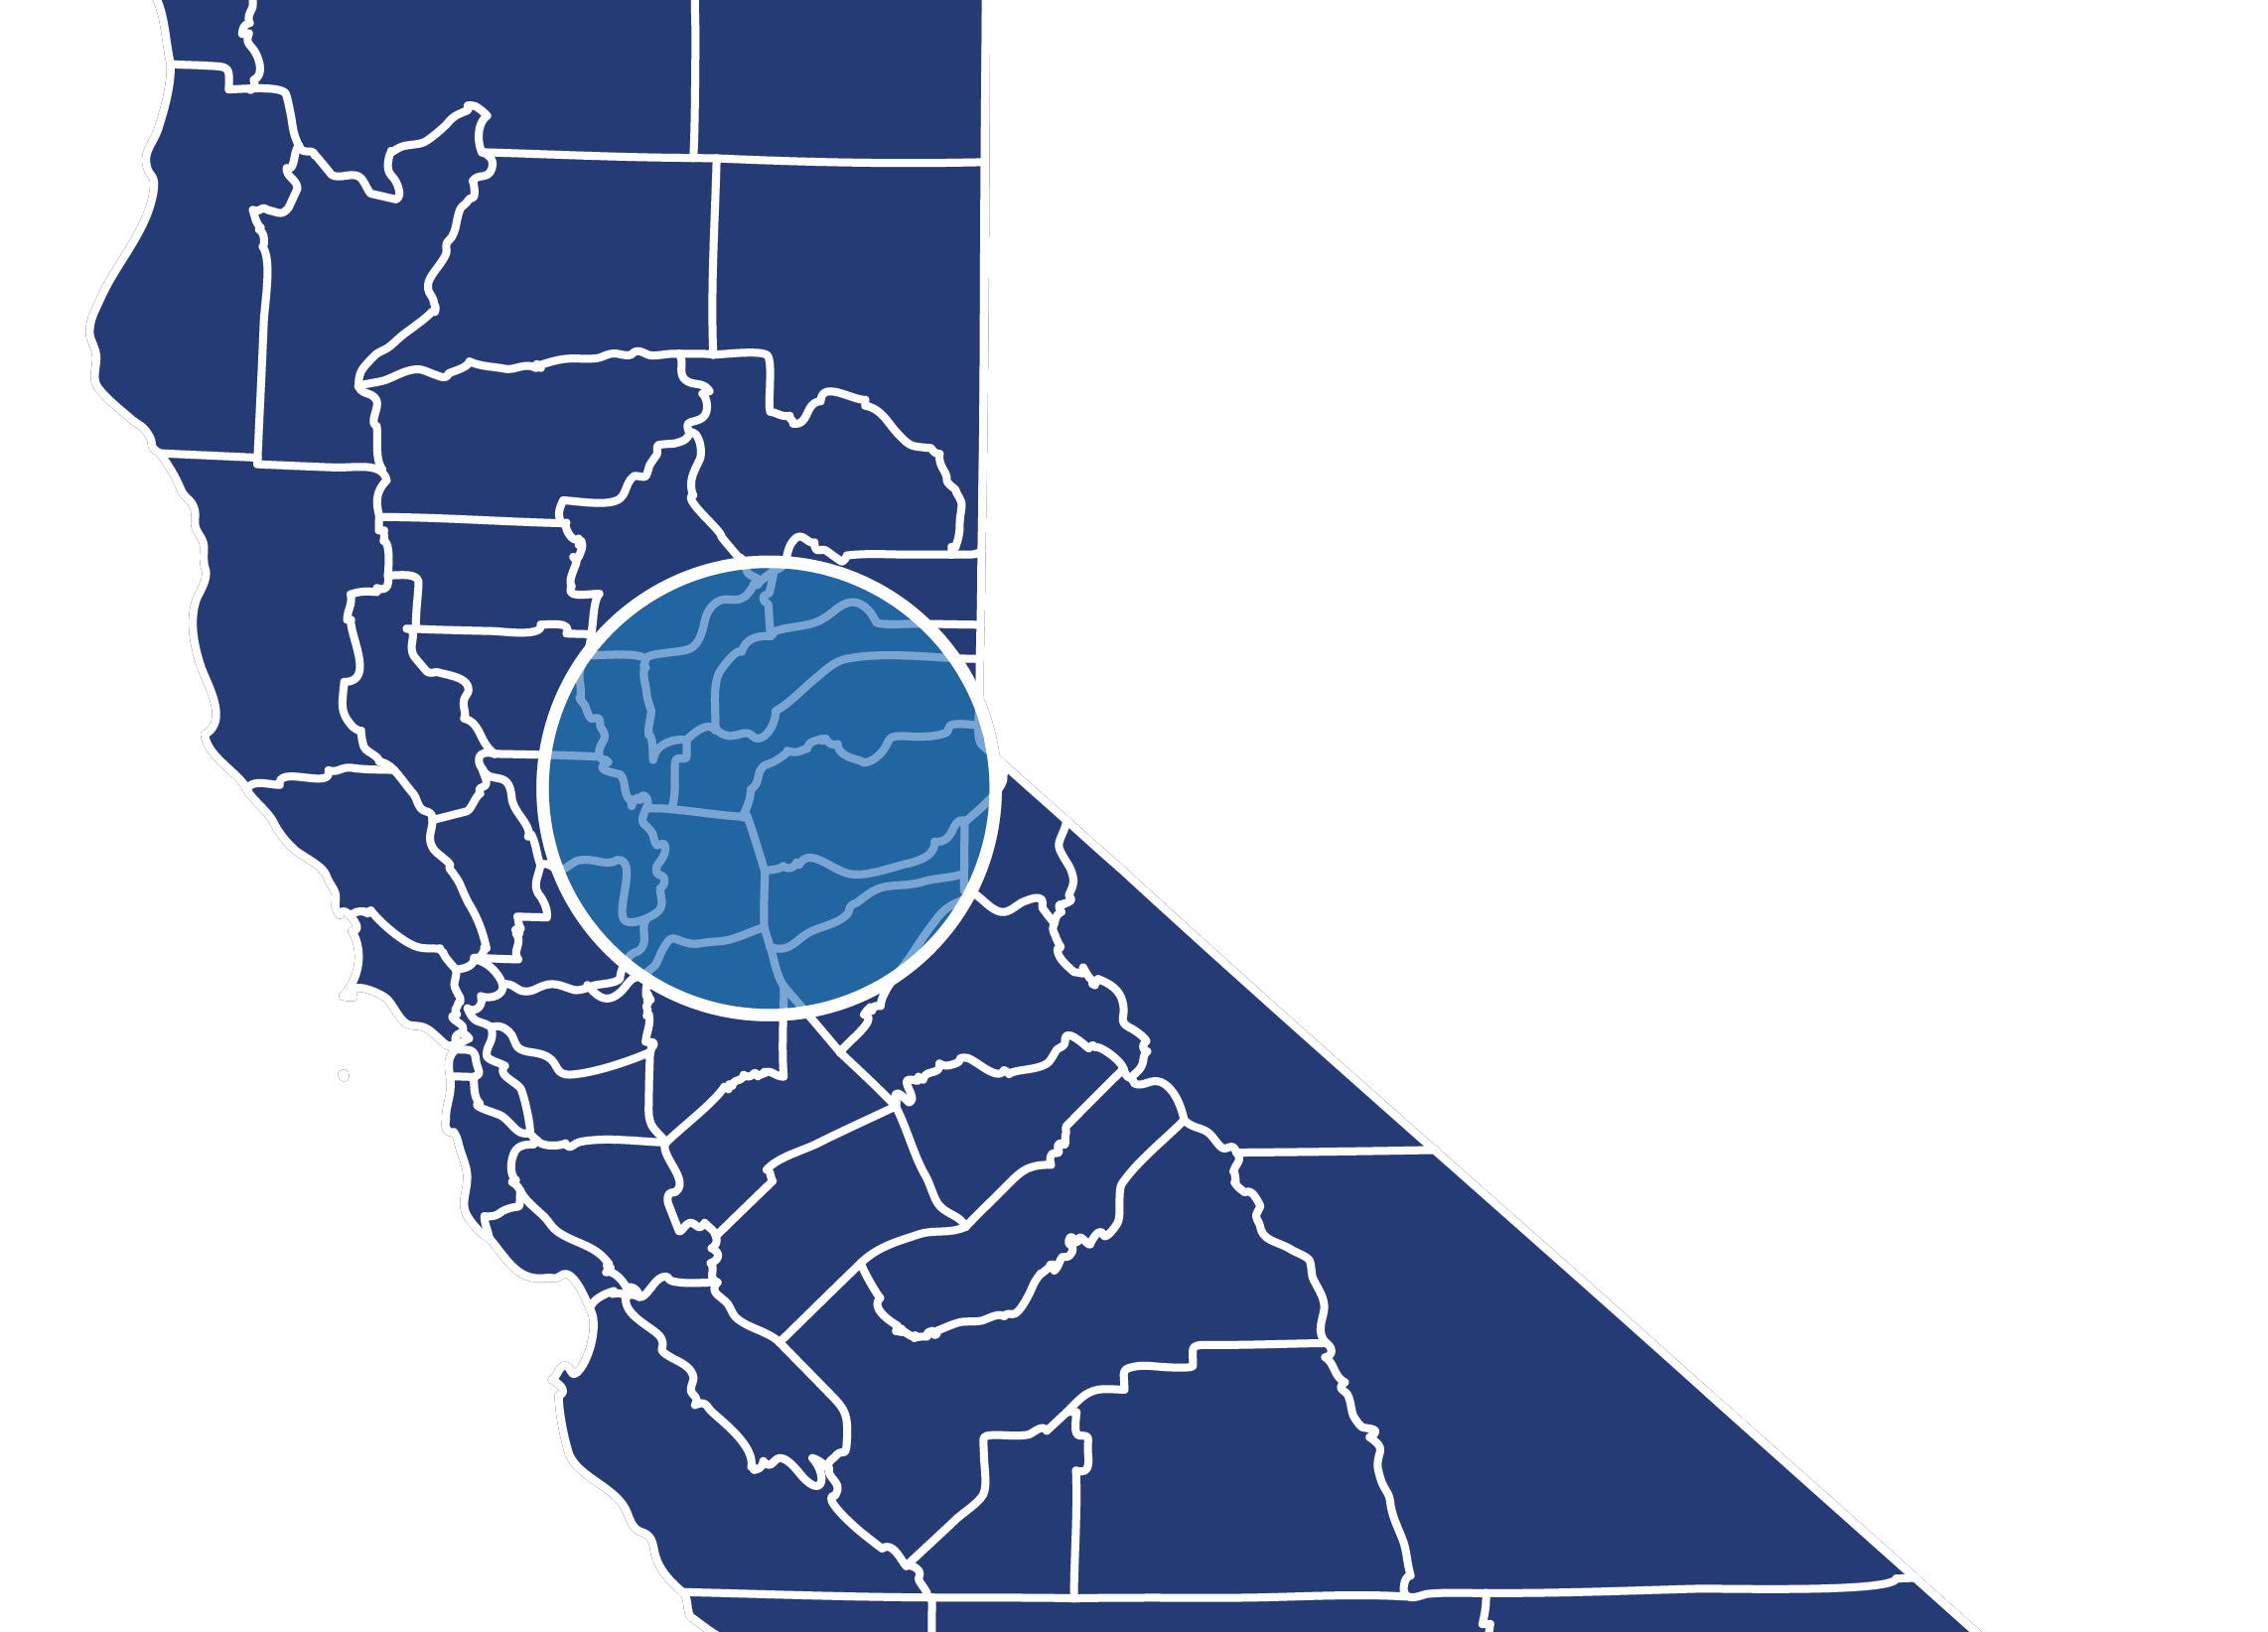 Three California Counties